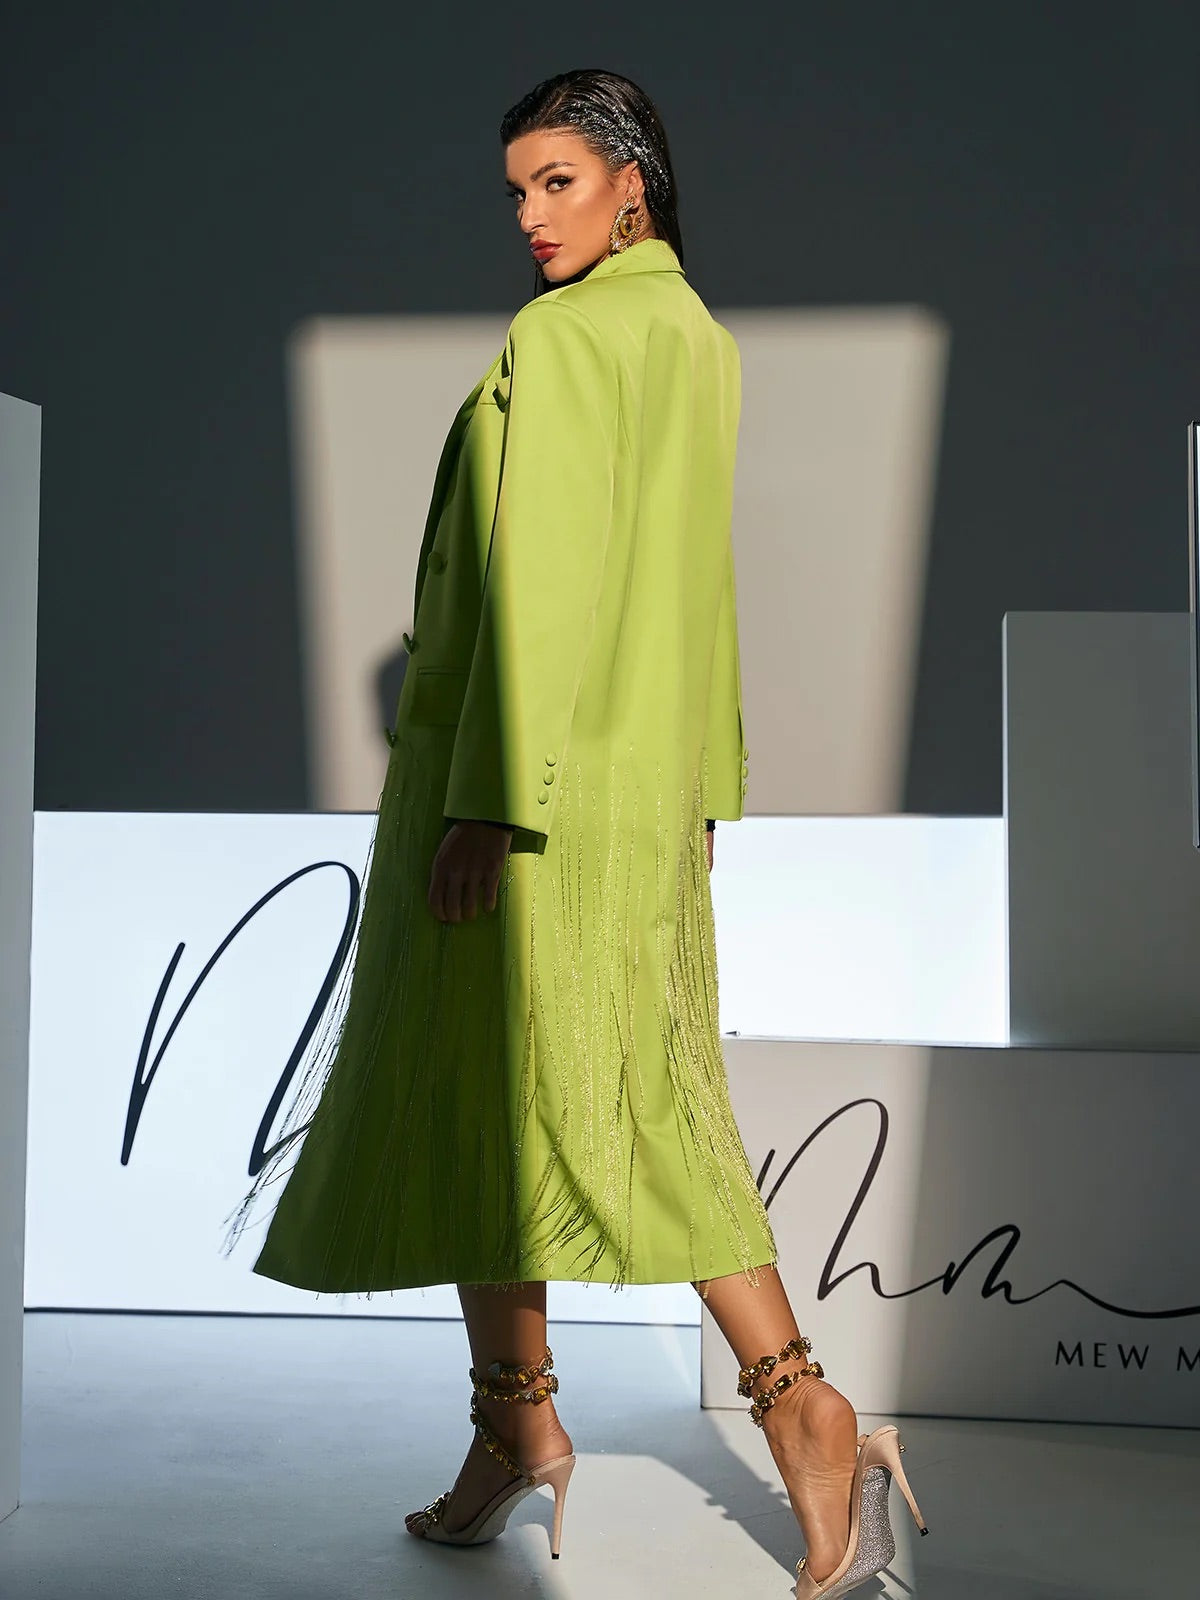 Neon green crystal fringe blazer coat (8293490622702)